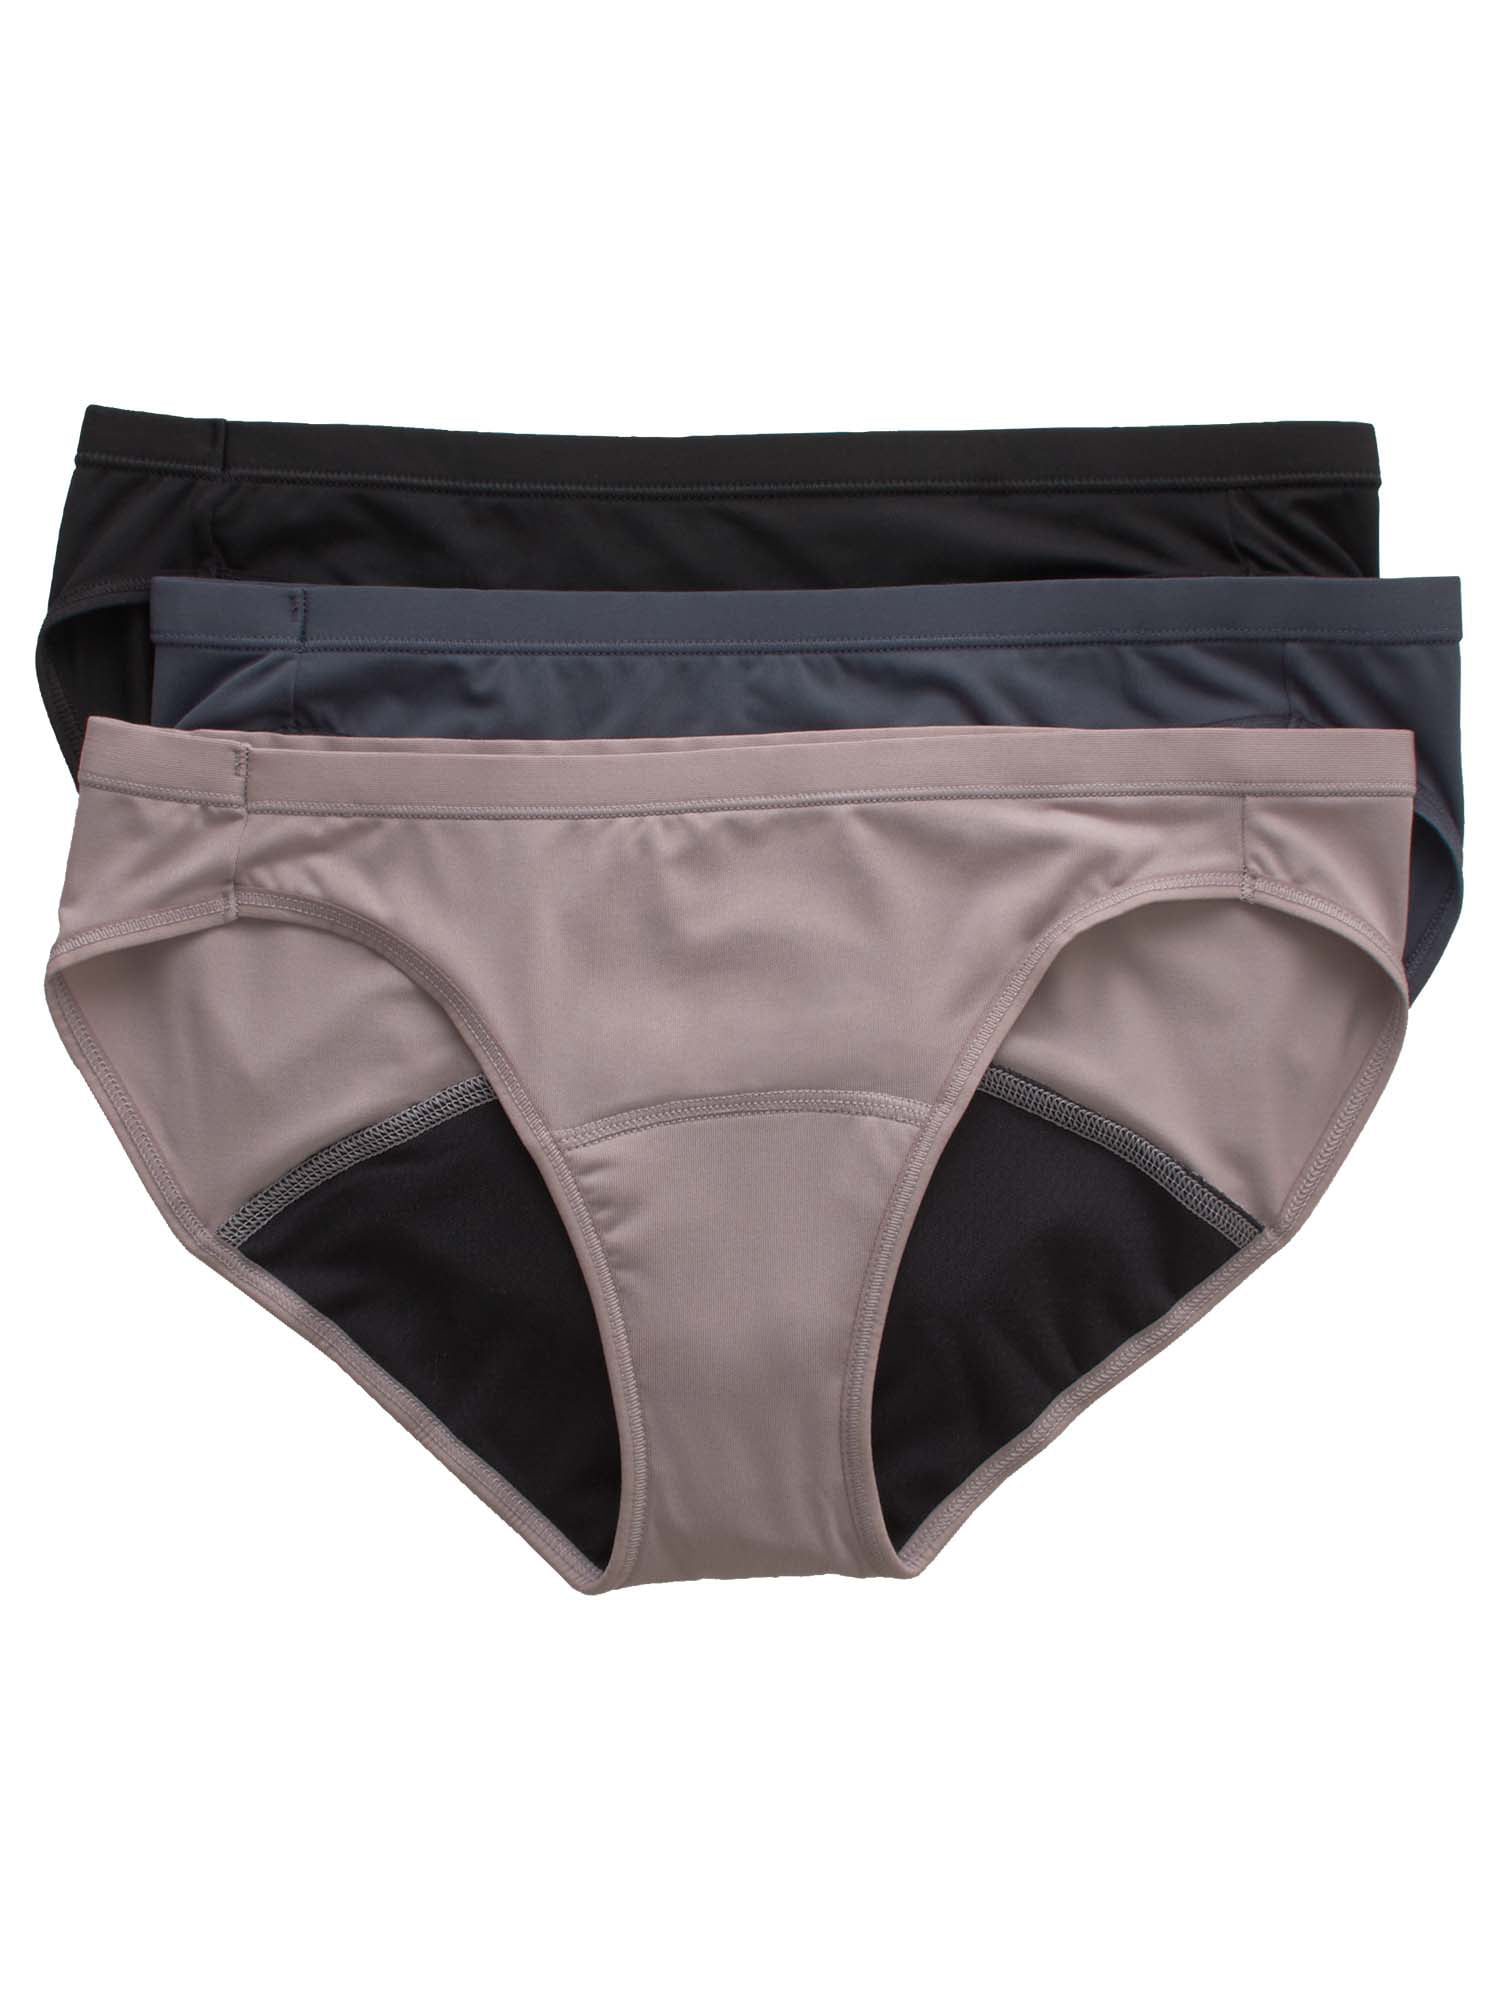 Hanes Comfort, Period.? Light Women's Bikini Underwear Pack, Black ...